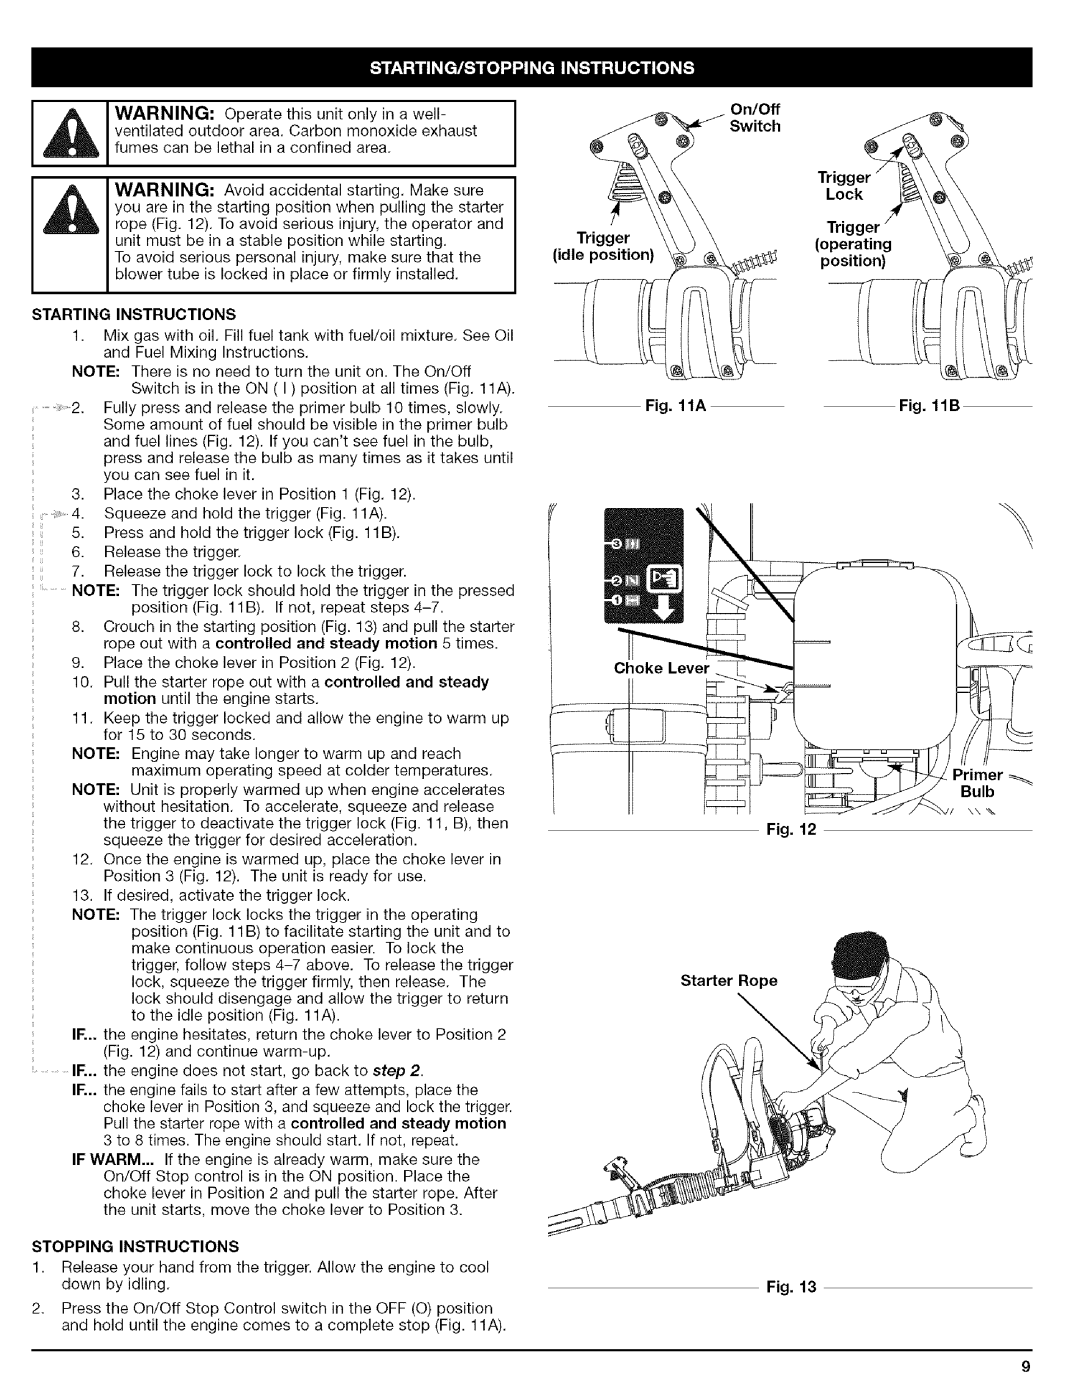 Craftsman 316.79479 manual Trigger, A, Primer Bulb Fig 